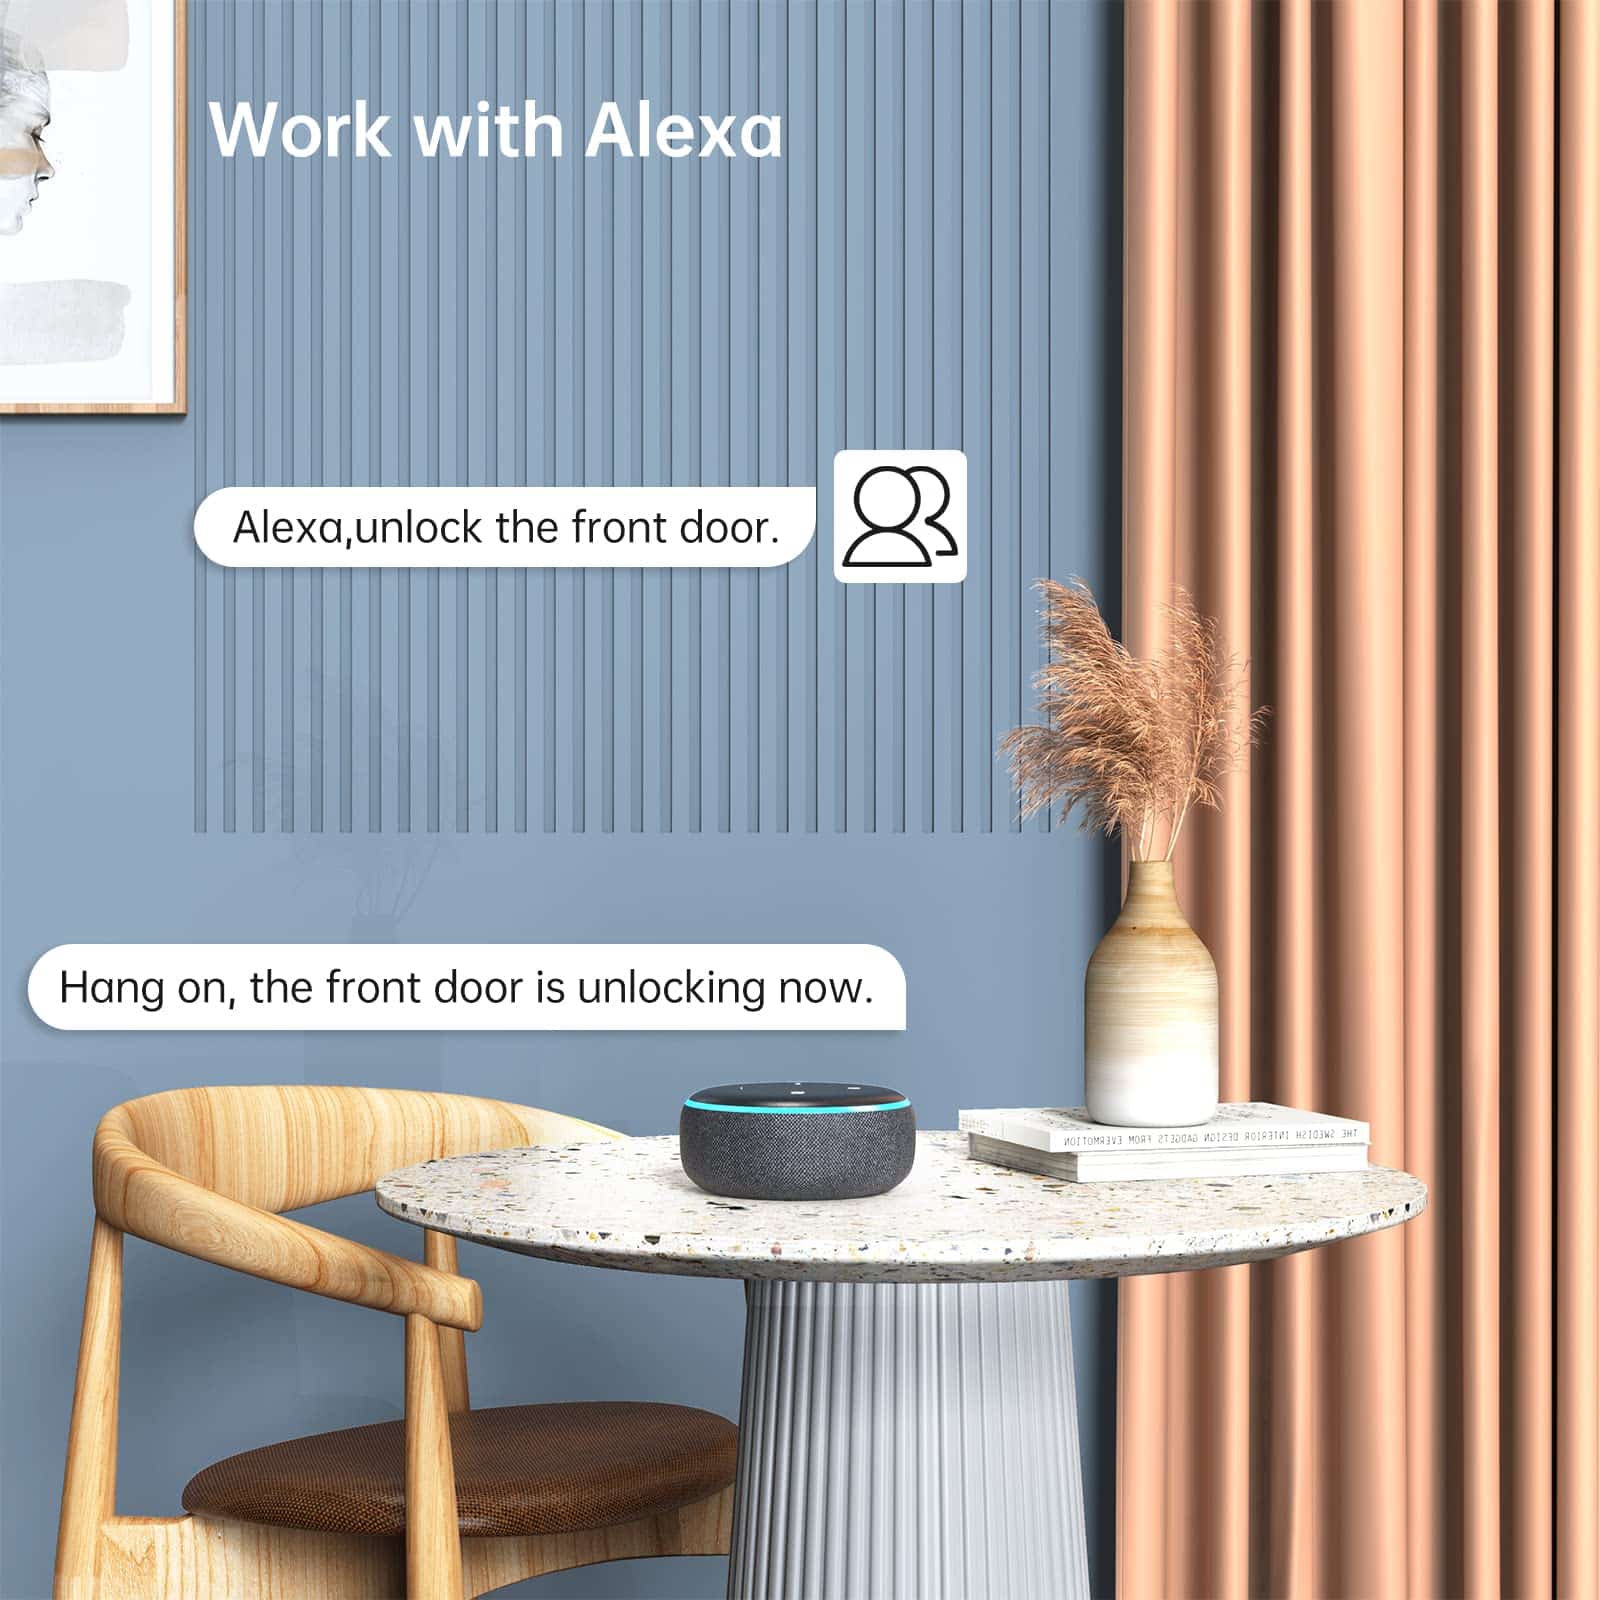 Work with Alexa